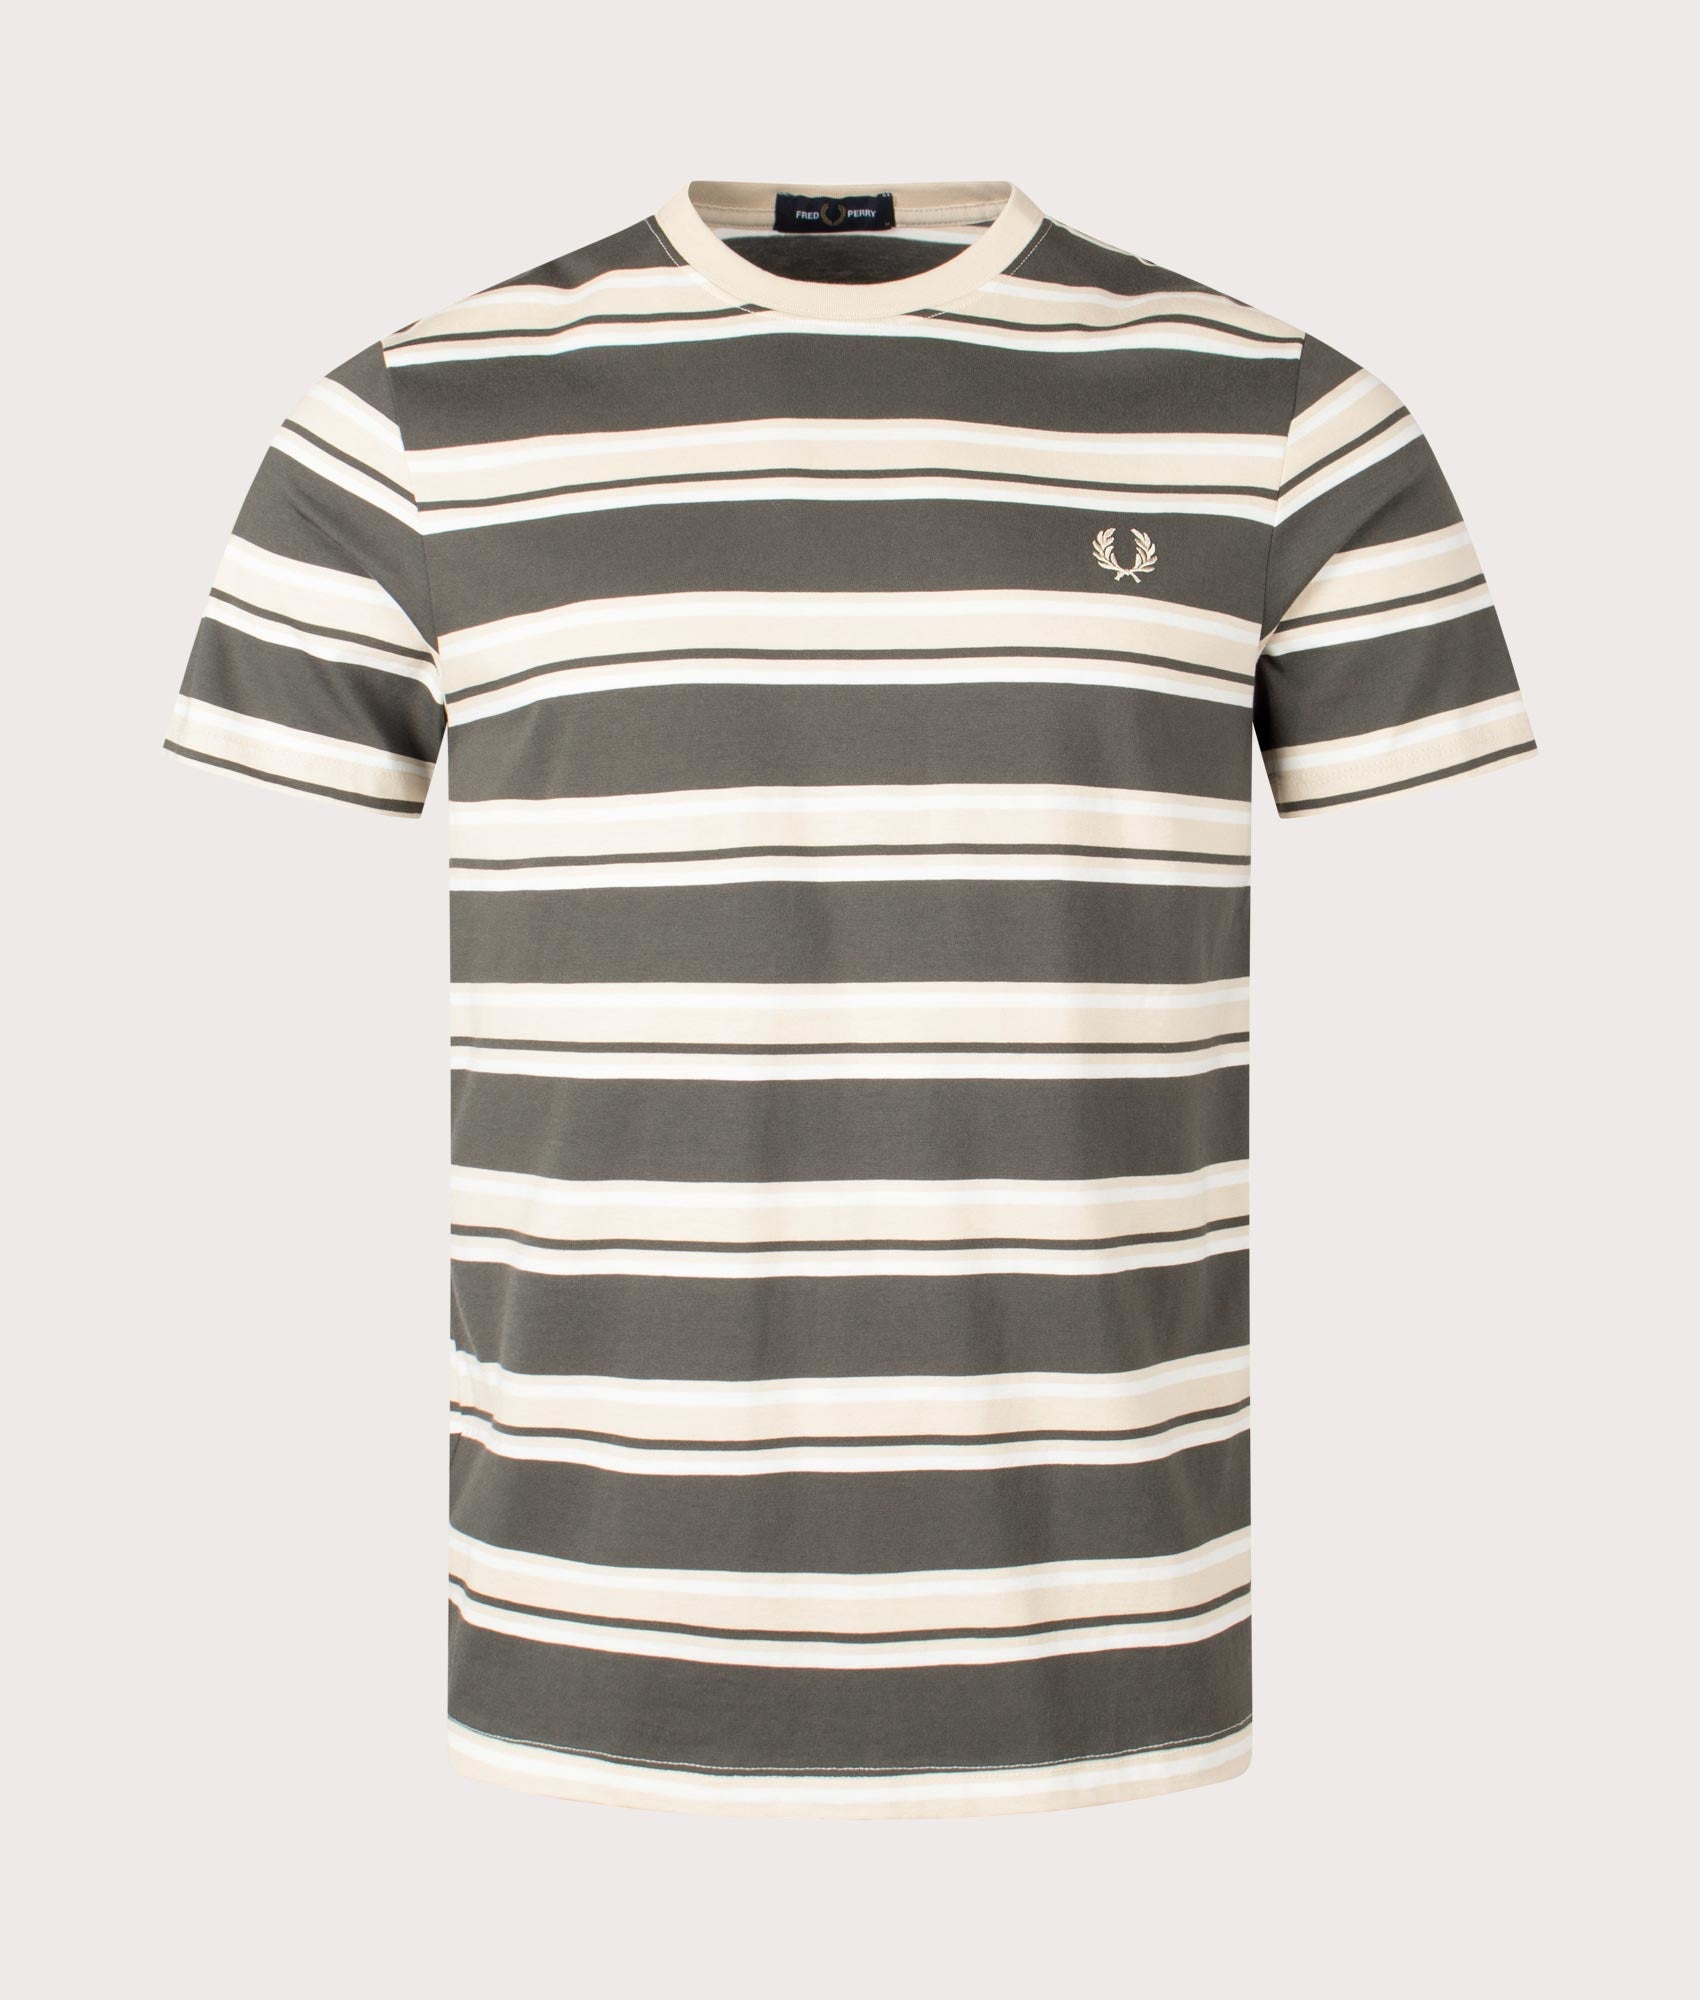 Fred Perry Mens Stripe T-Shirt - Colour: U98 Field Green/Snow White/Oatmeal - Size: XXL